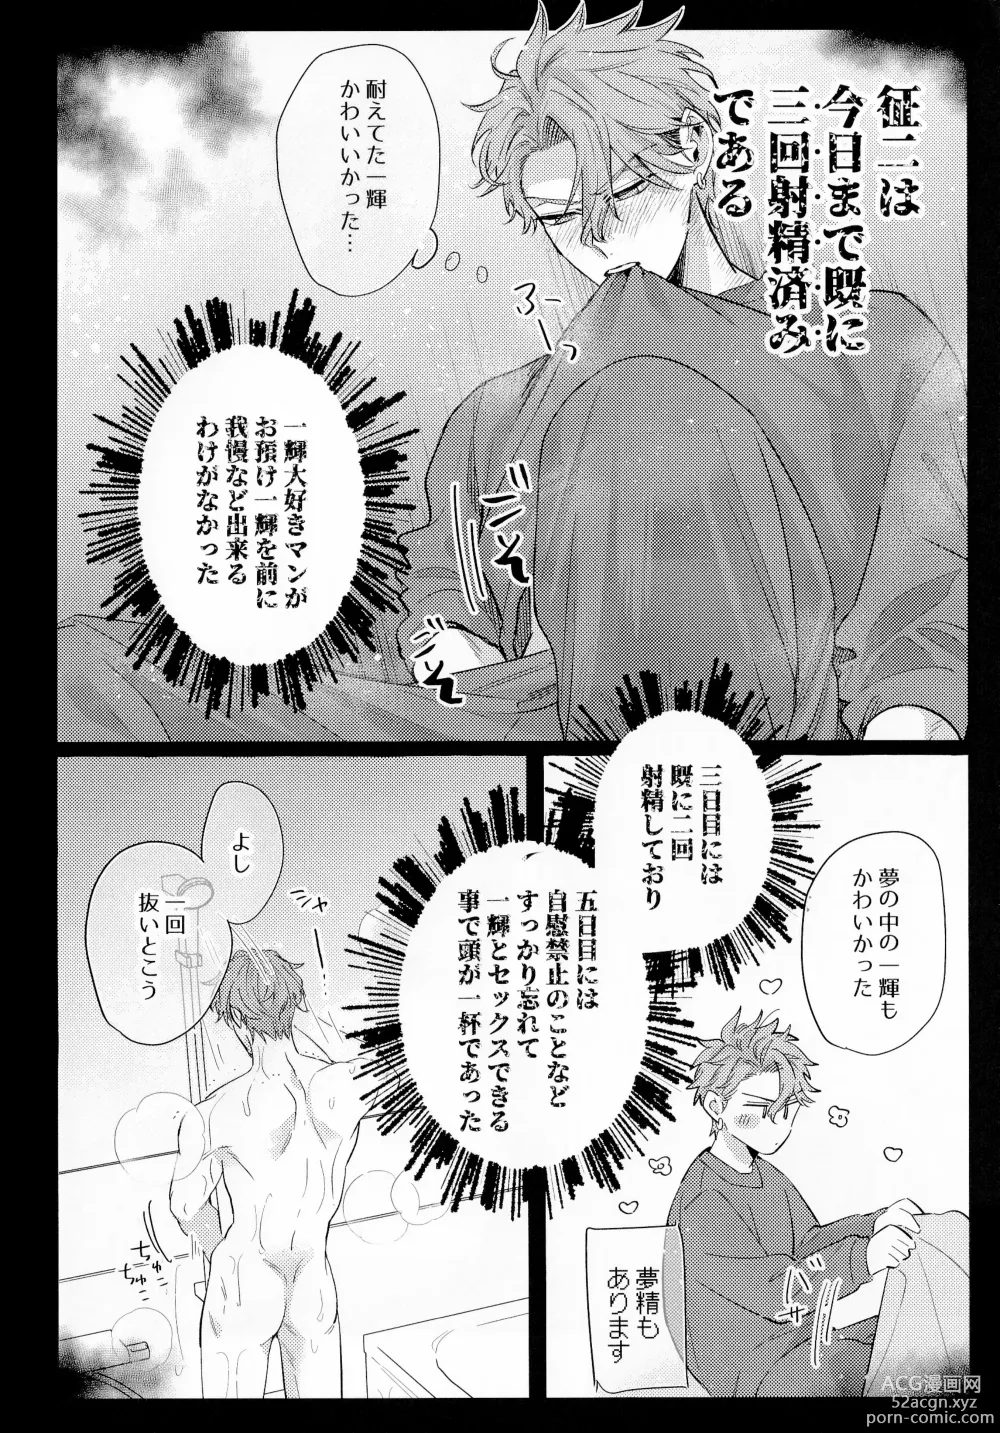 Page 23 of doujinshi skip run!run!run!